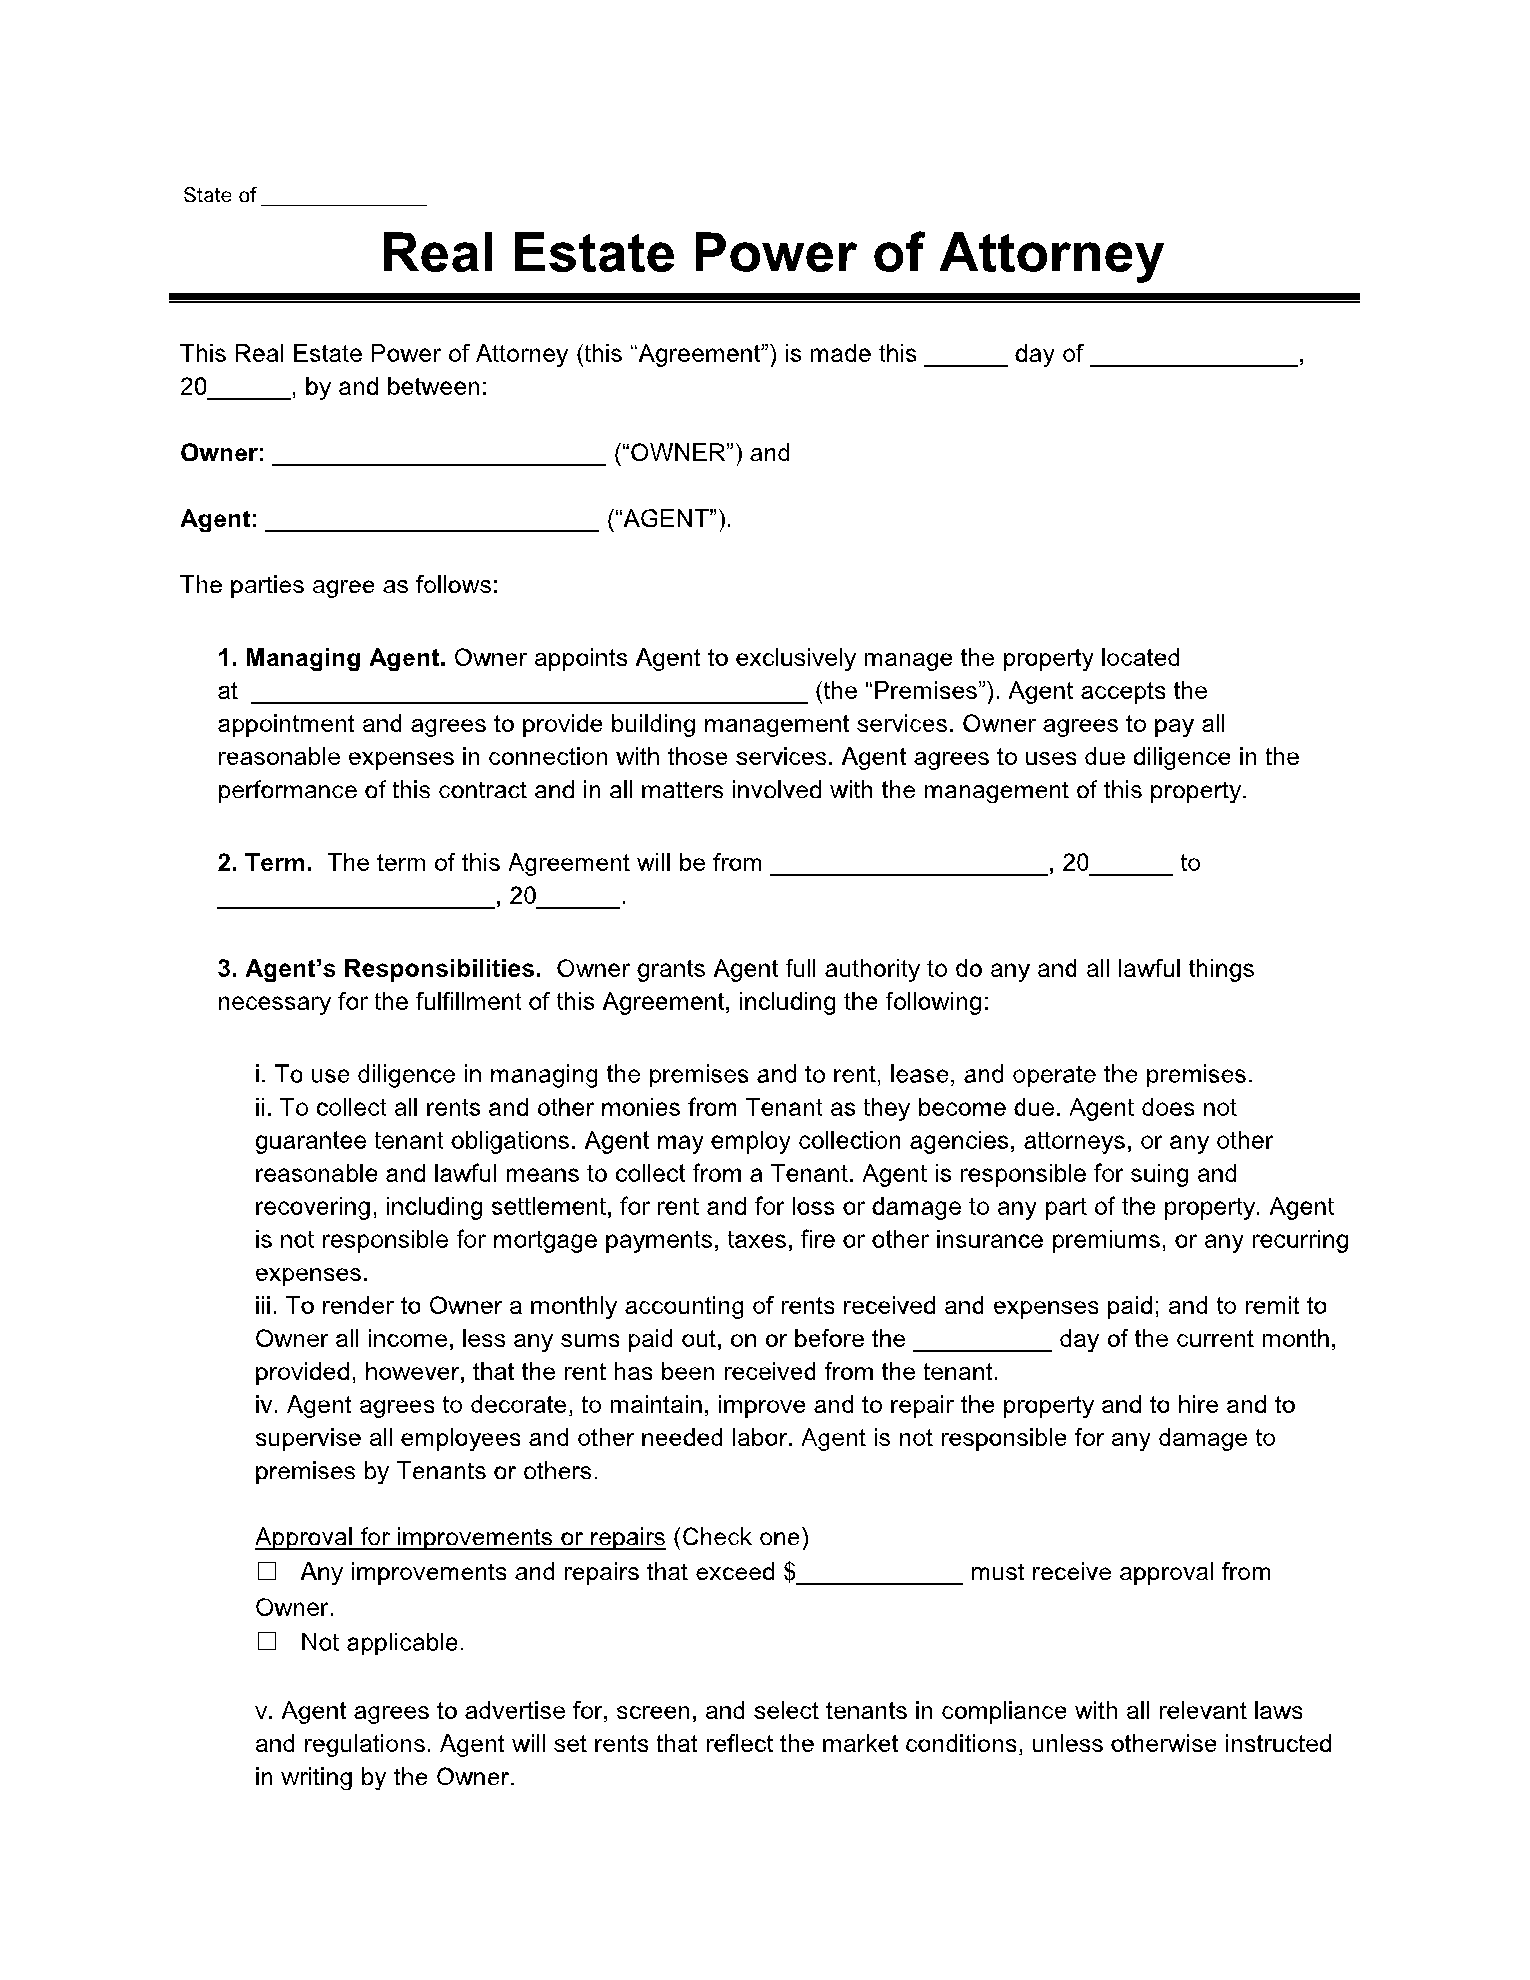 Power of Attorney in Georgia